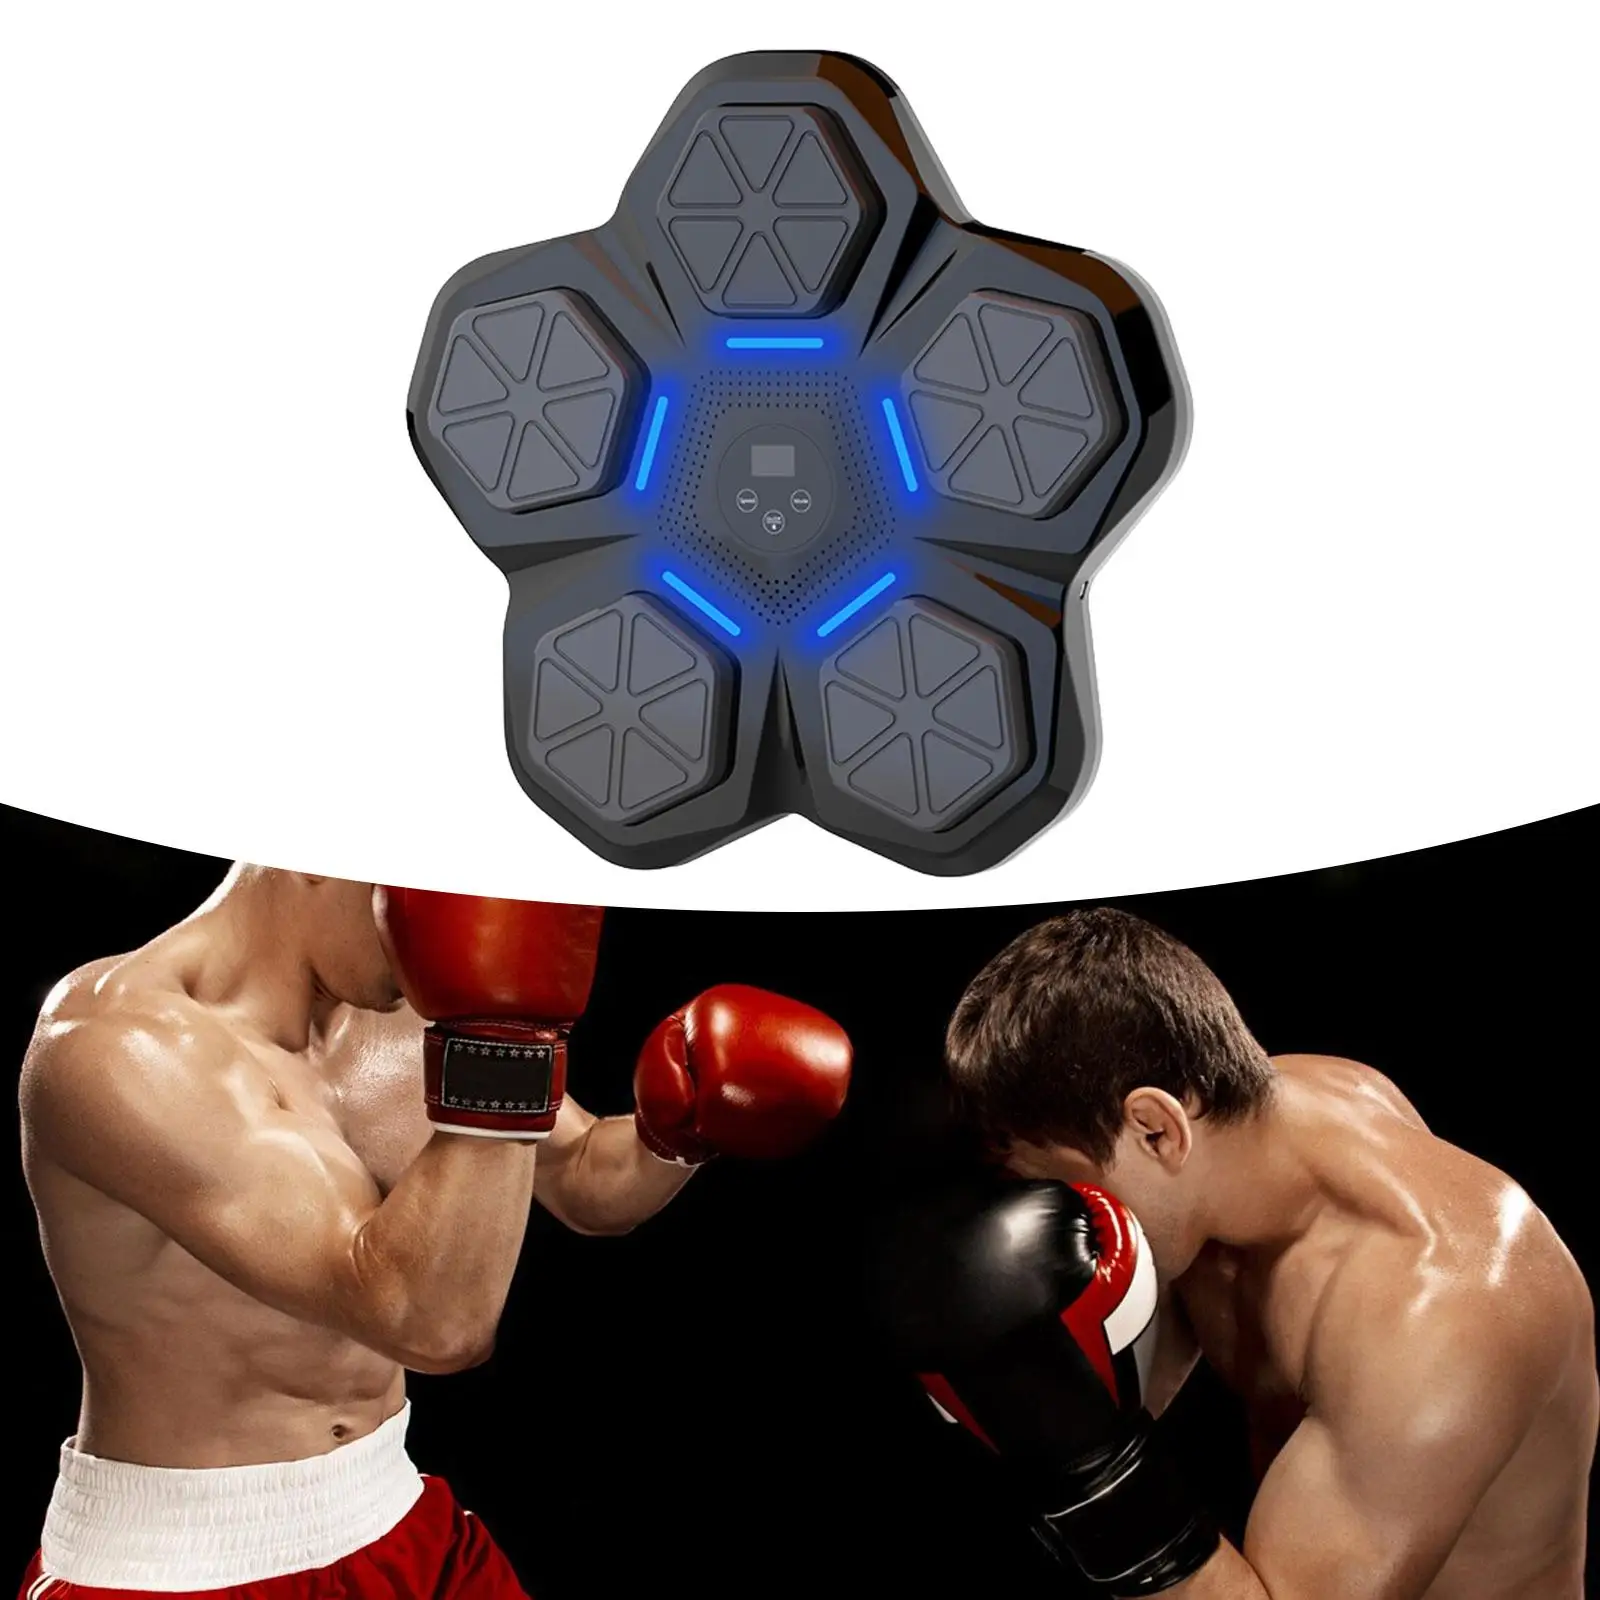 

Music Boxing Machine Electronic Music Boxing Wall Target Boxing Trainer for Kickboxing Taekwondo Speed Response Coordination